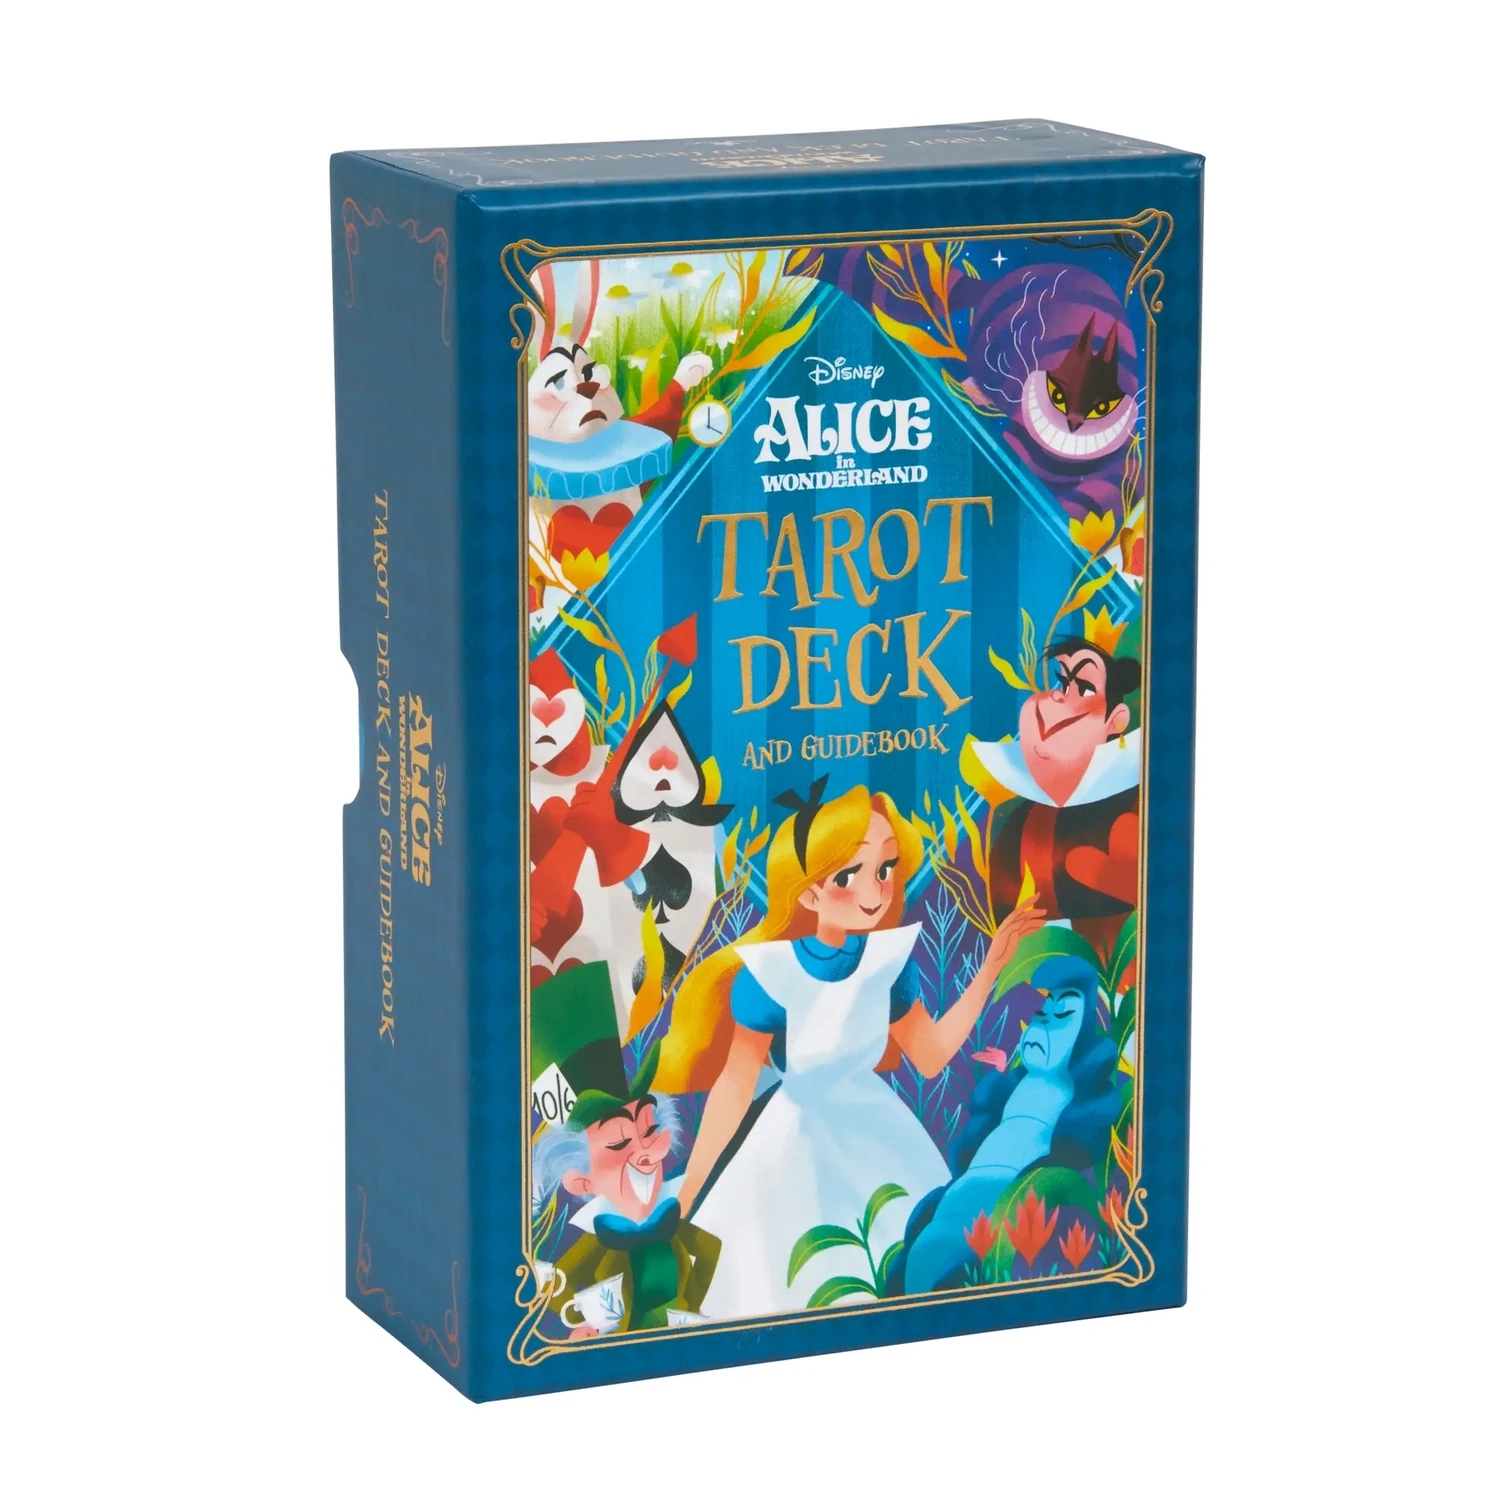 Alice in Wonderland Deck Tarot Deck & Guide Book